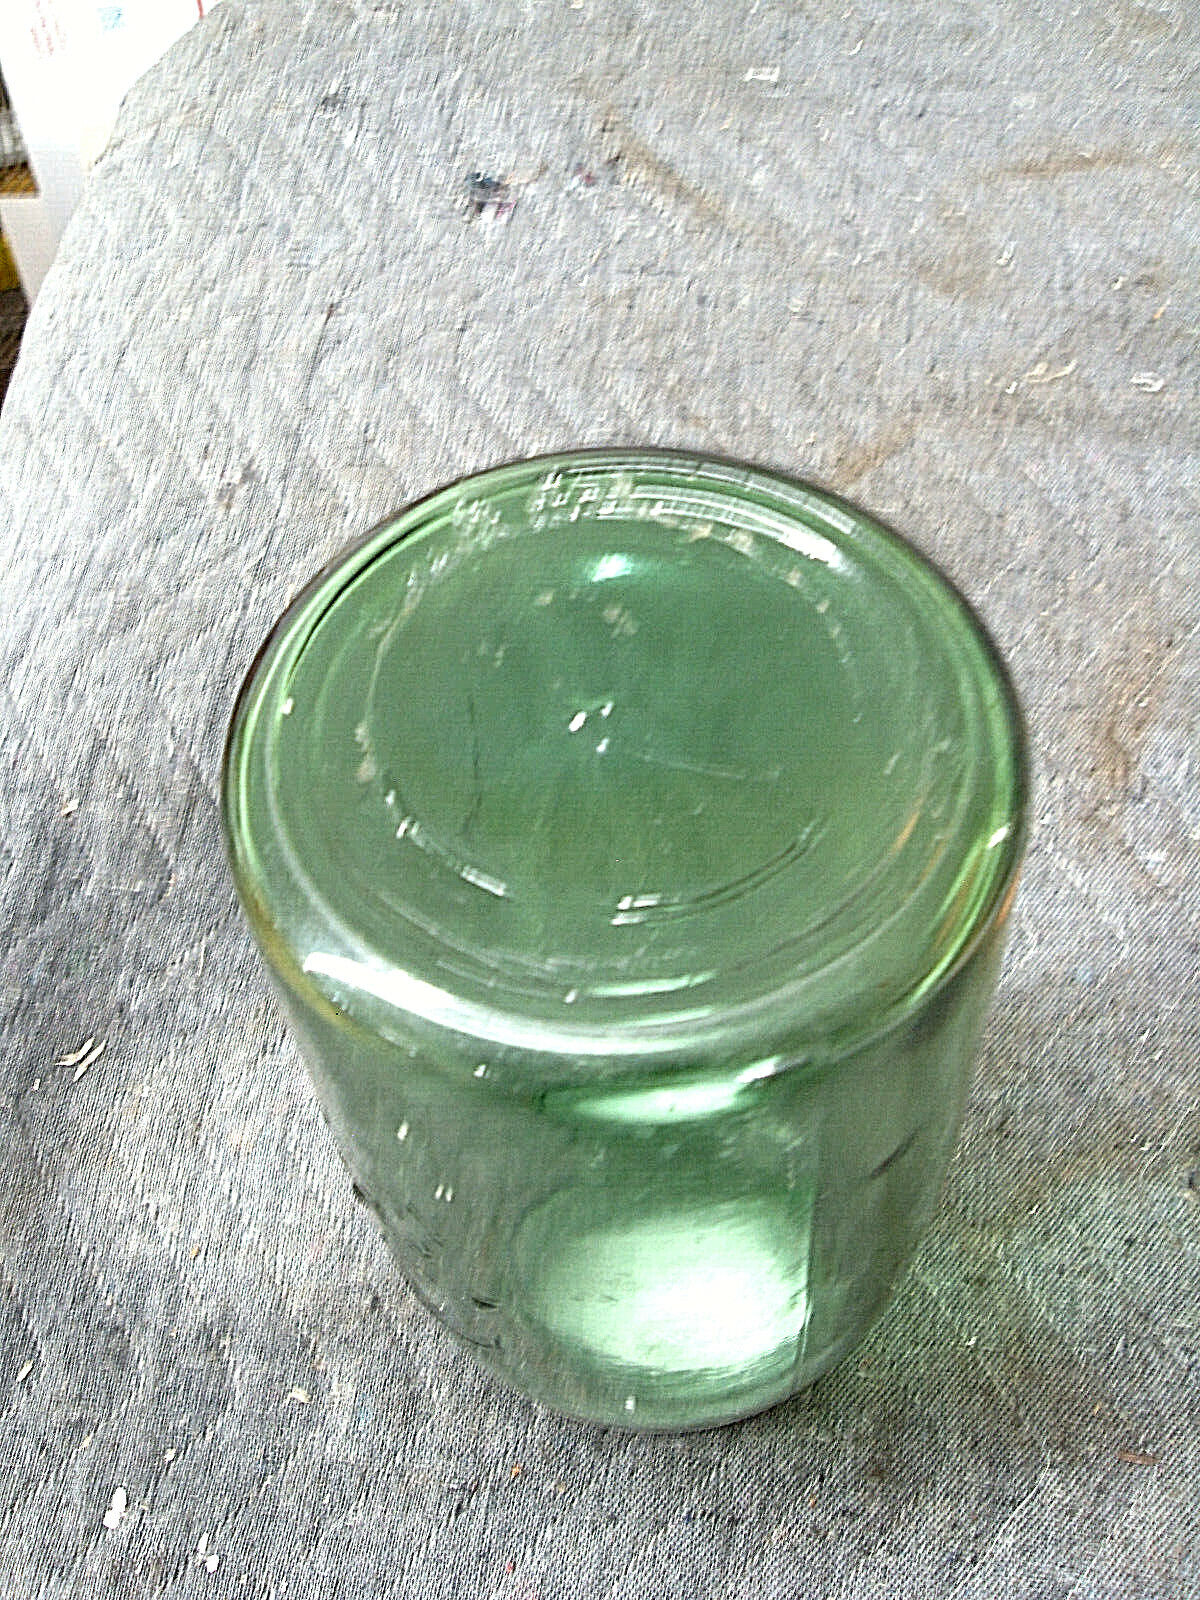 RARE ANTIQUE OLIVE GREEN COLORED 1/2 HALF GALLON BALL PERFECT MASON FRUIT JAR  